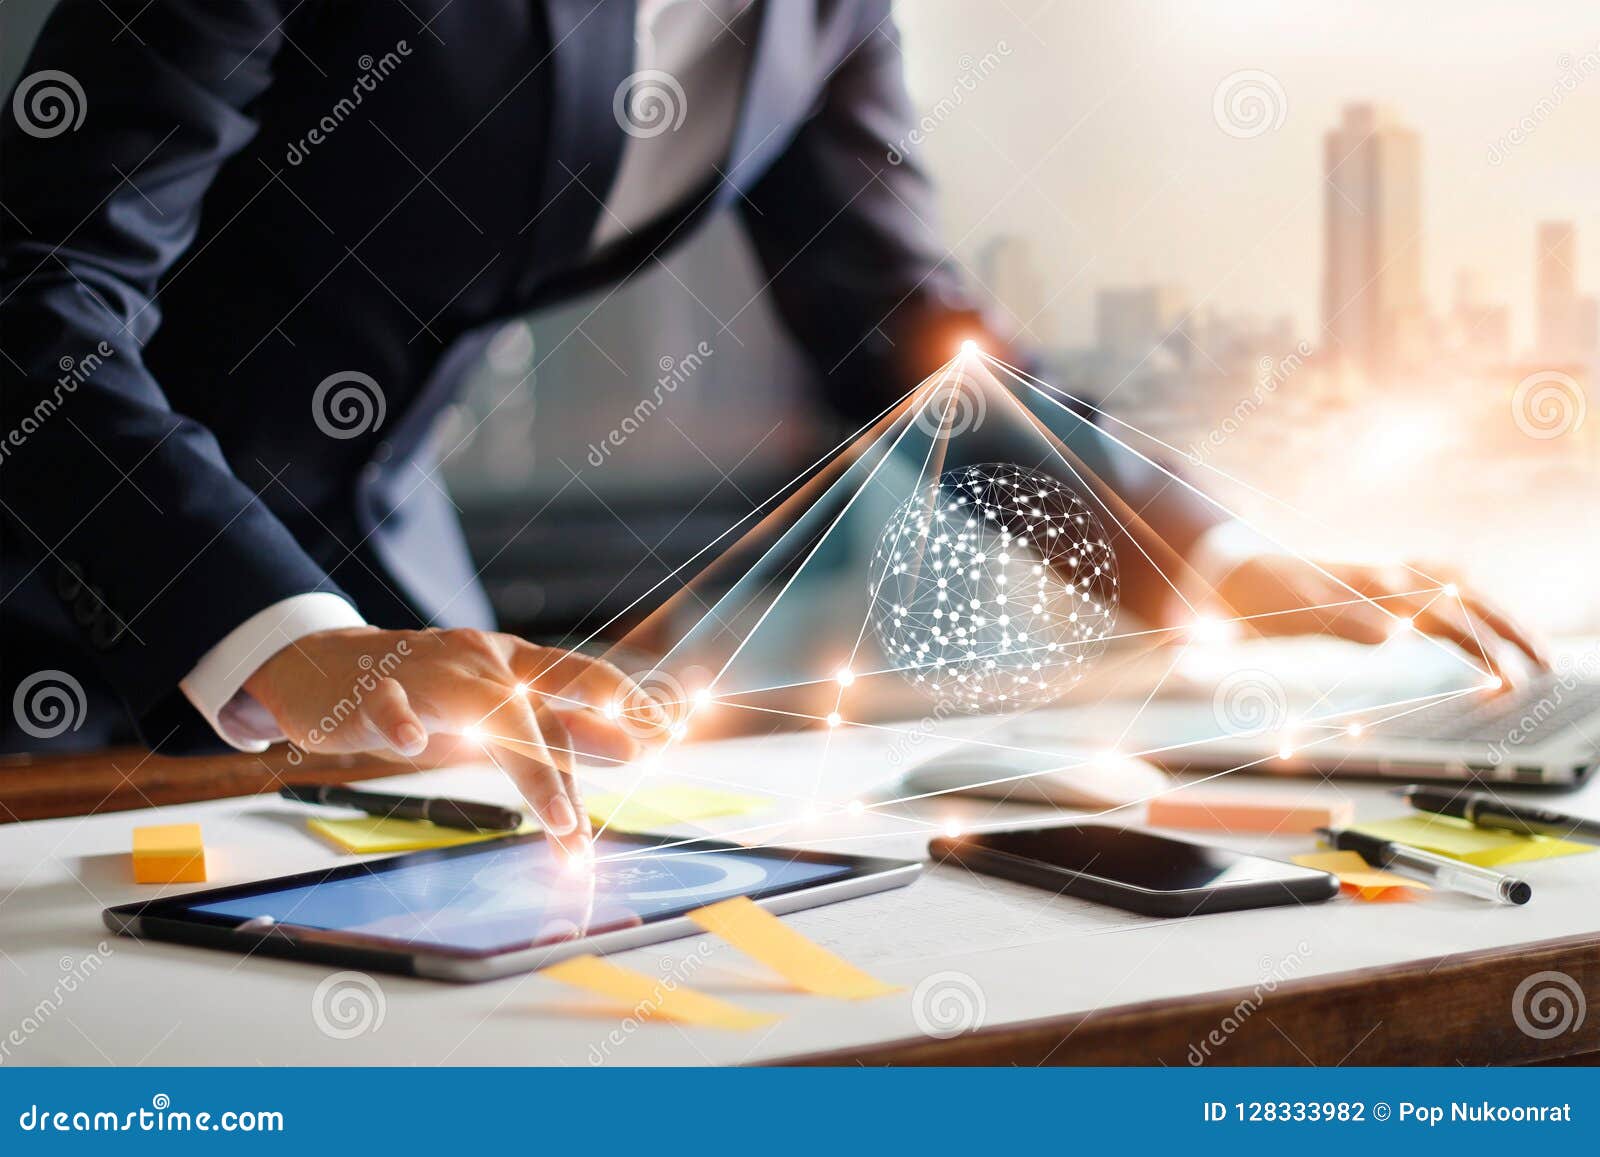 businessman touching tablet and laptop. managing data exchange